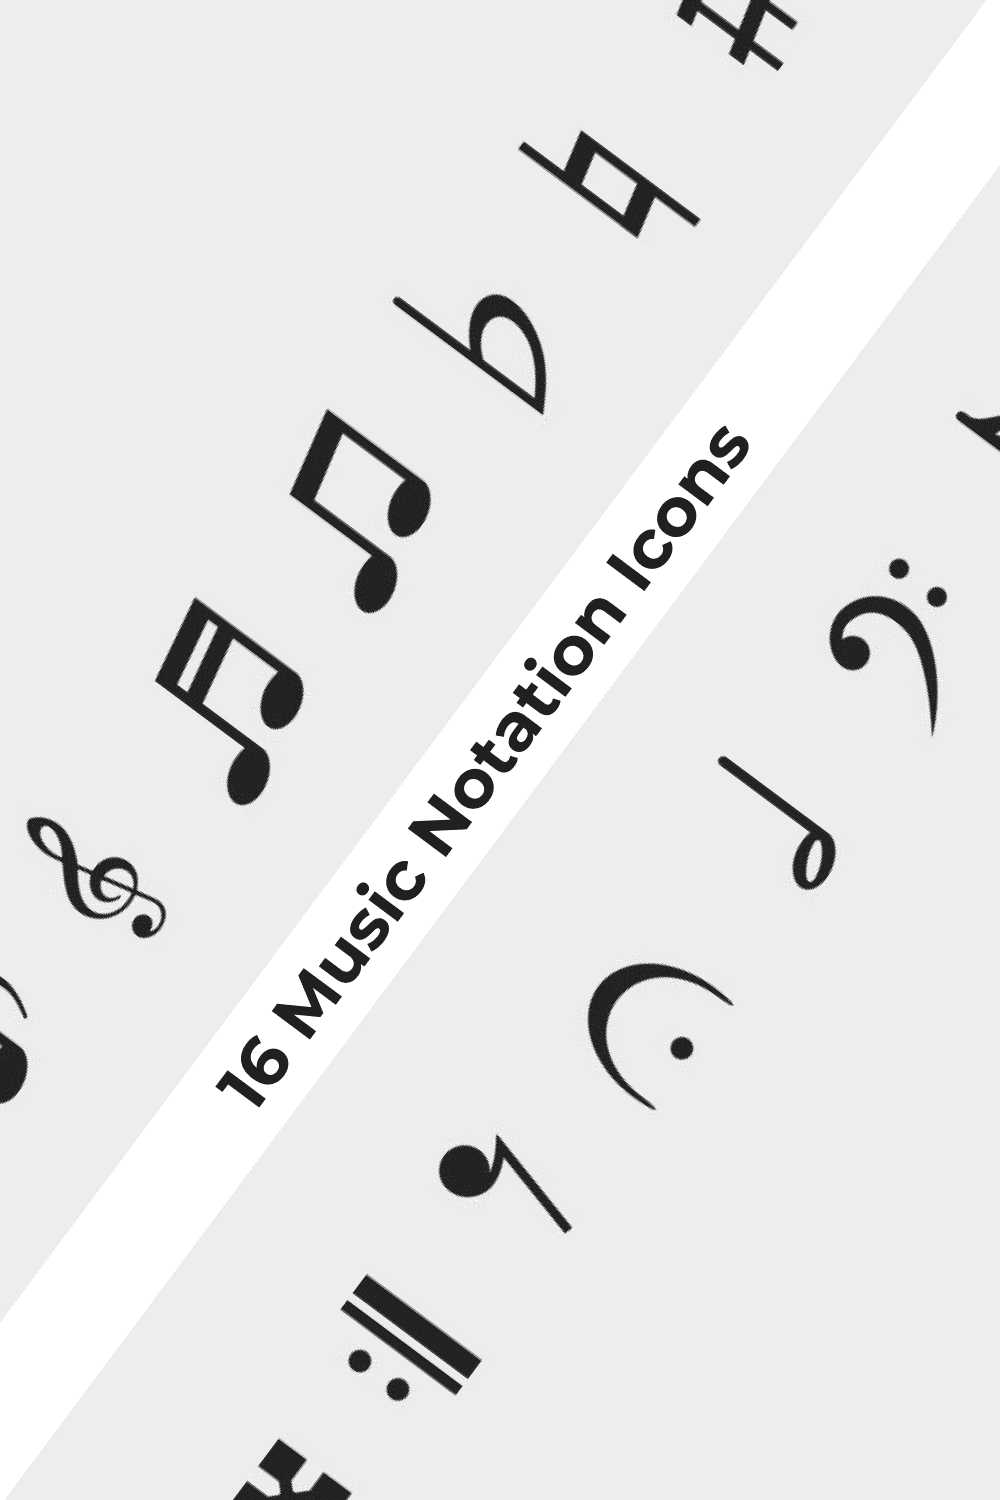 16 Music Notation Icons Pinterest.